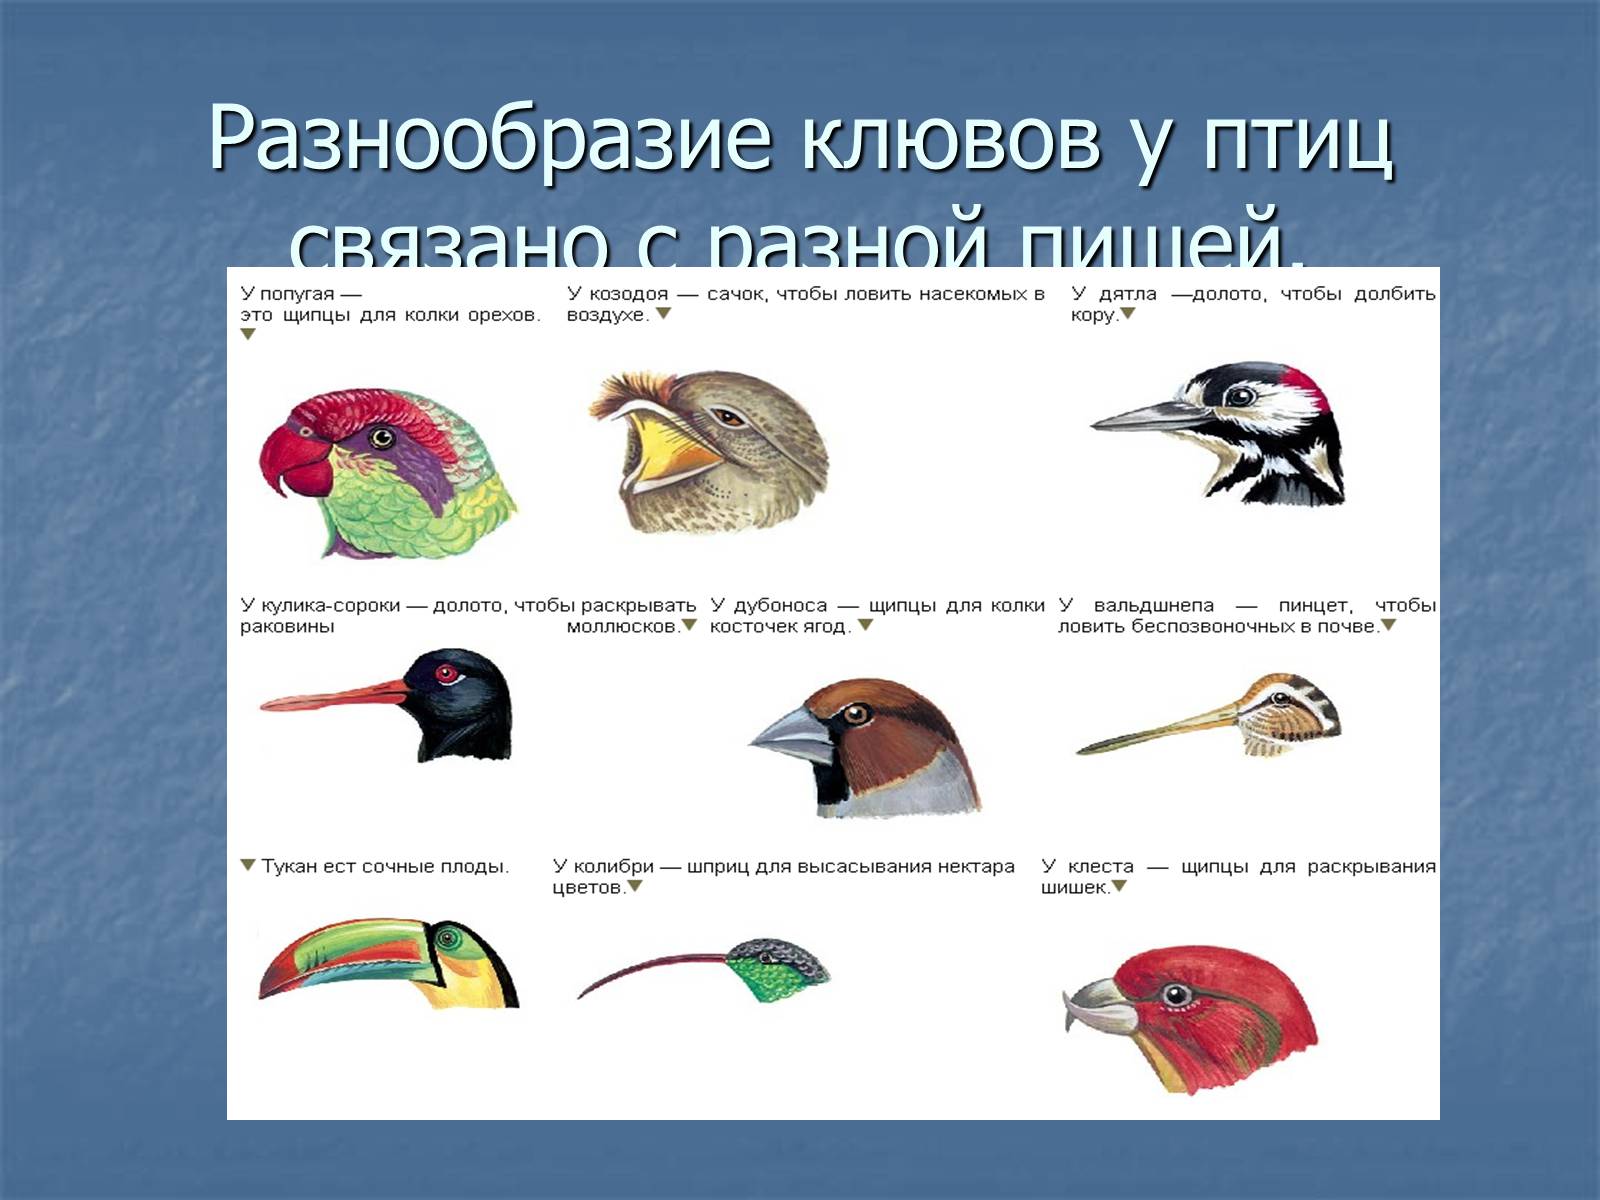 Разнообразие птиц презентация. Клювы птиц. Разнообразие клювов. Разнообразие клювов птиц. Формы клюва у птиц.